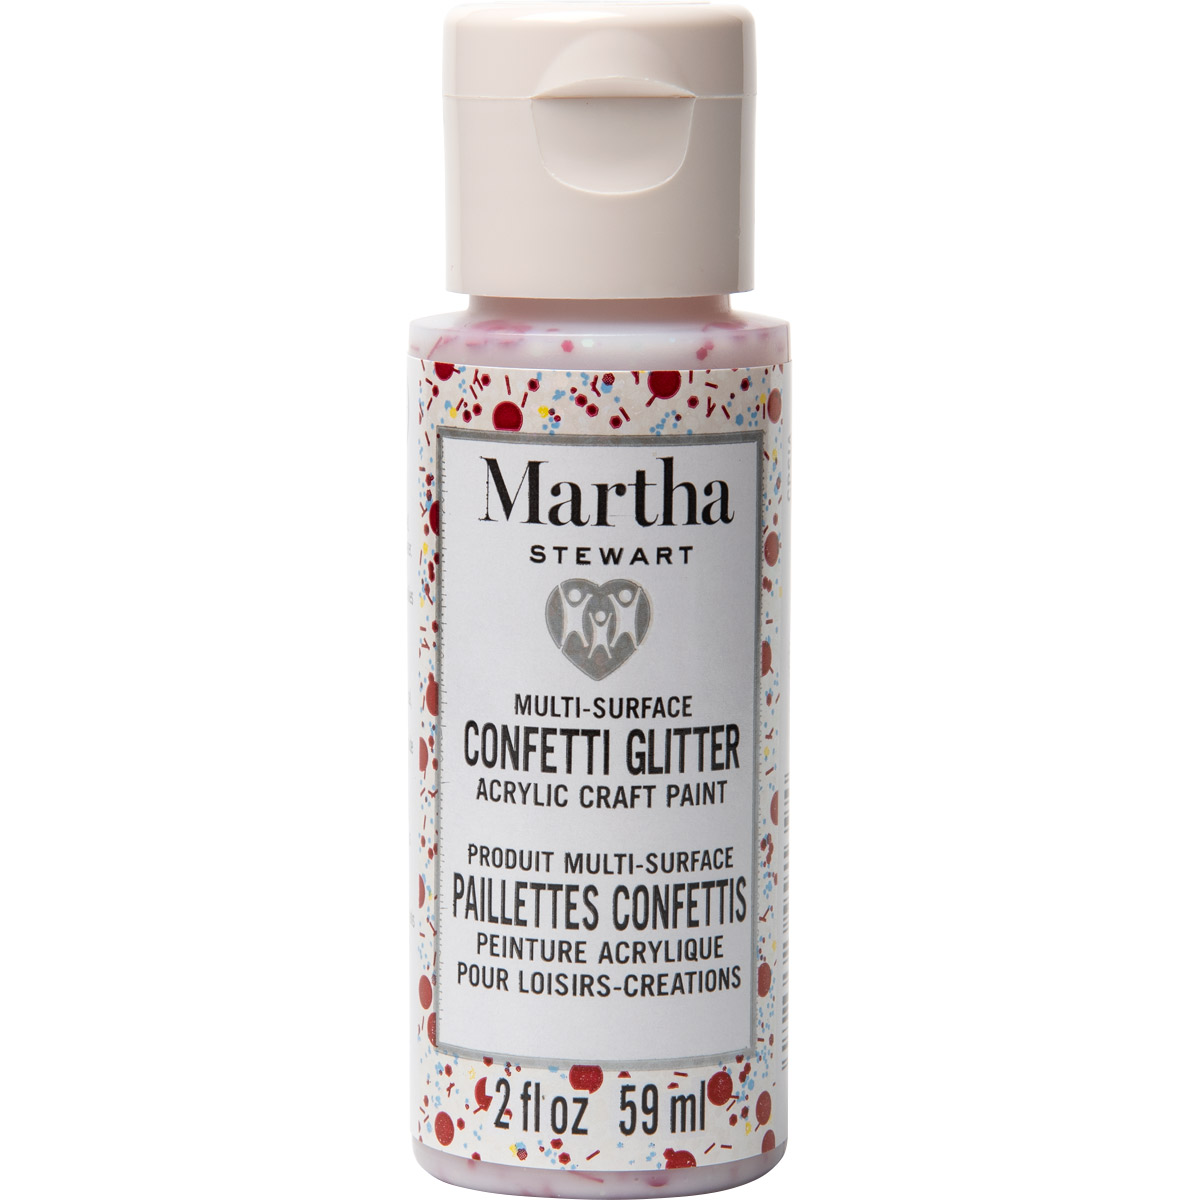 Martha Stewart ® Multi-Surface Confetti Glitter Acrylic Craft Paint CPSIA - Ruby Sunset, 2 oz. - 991